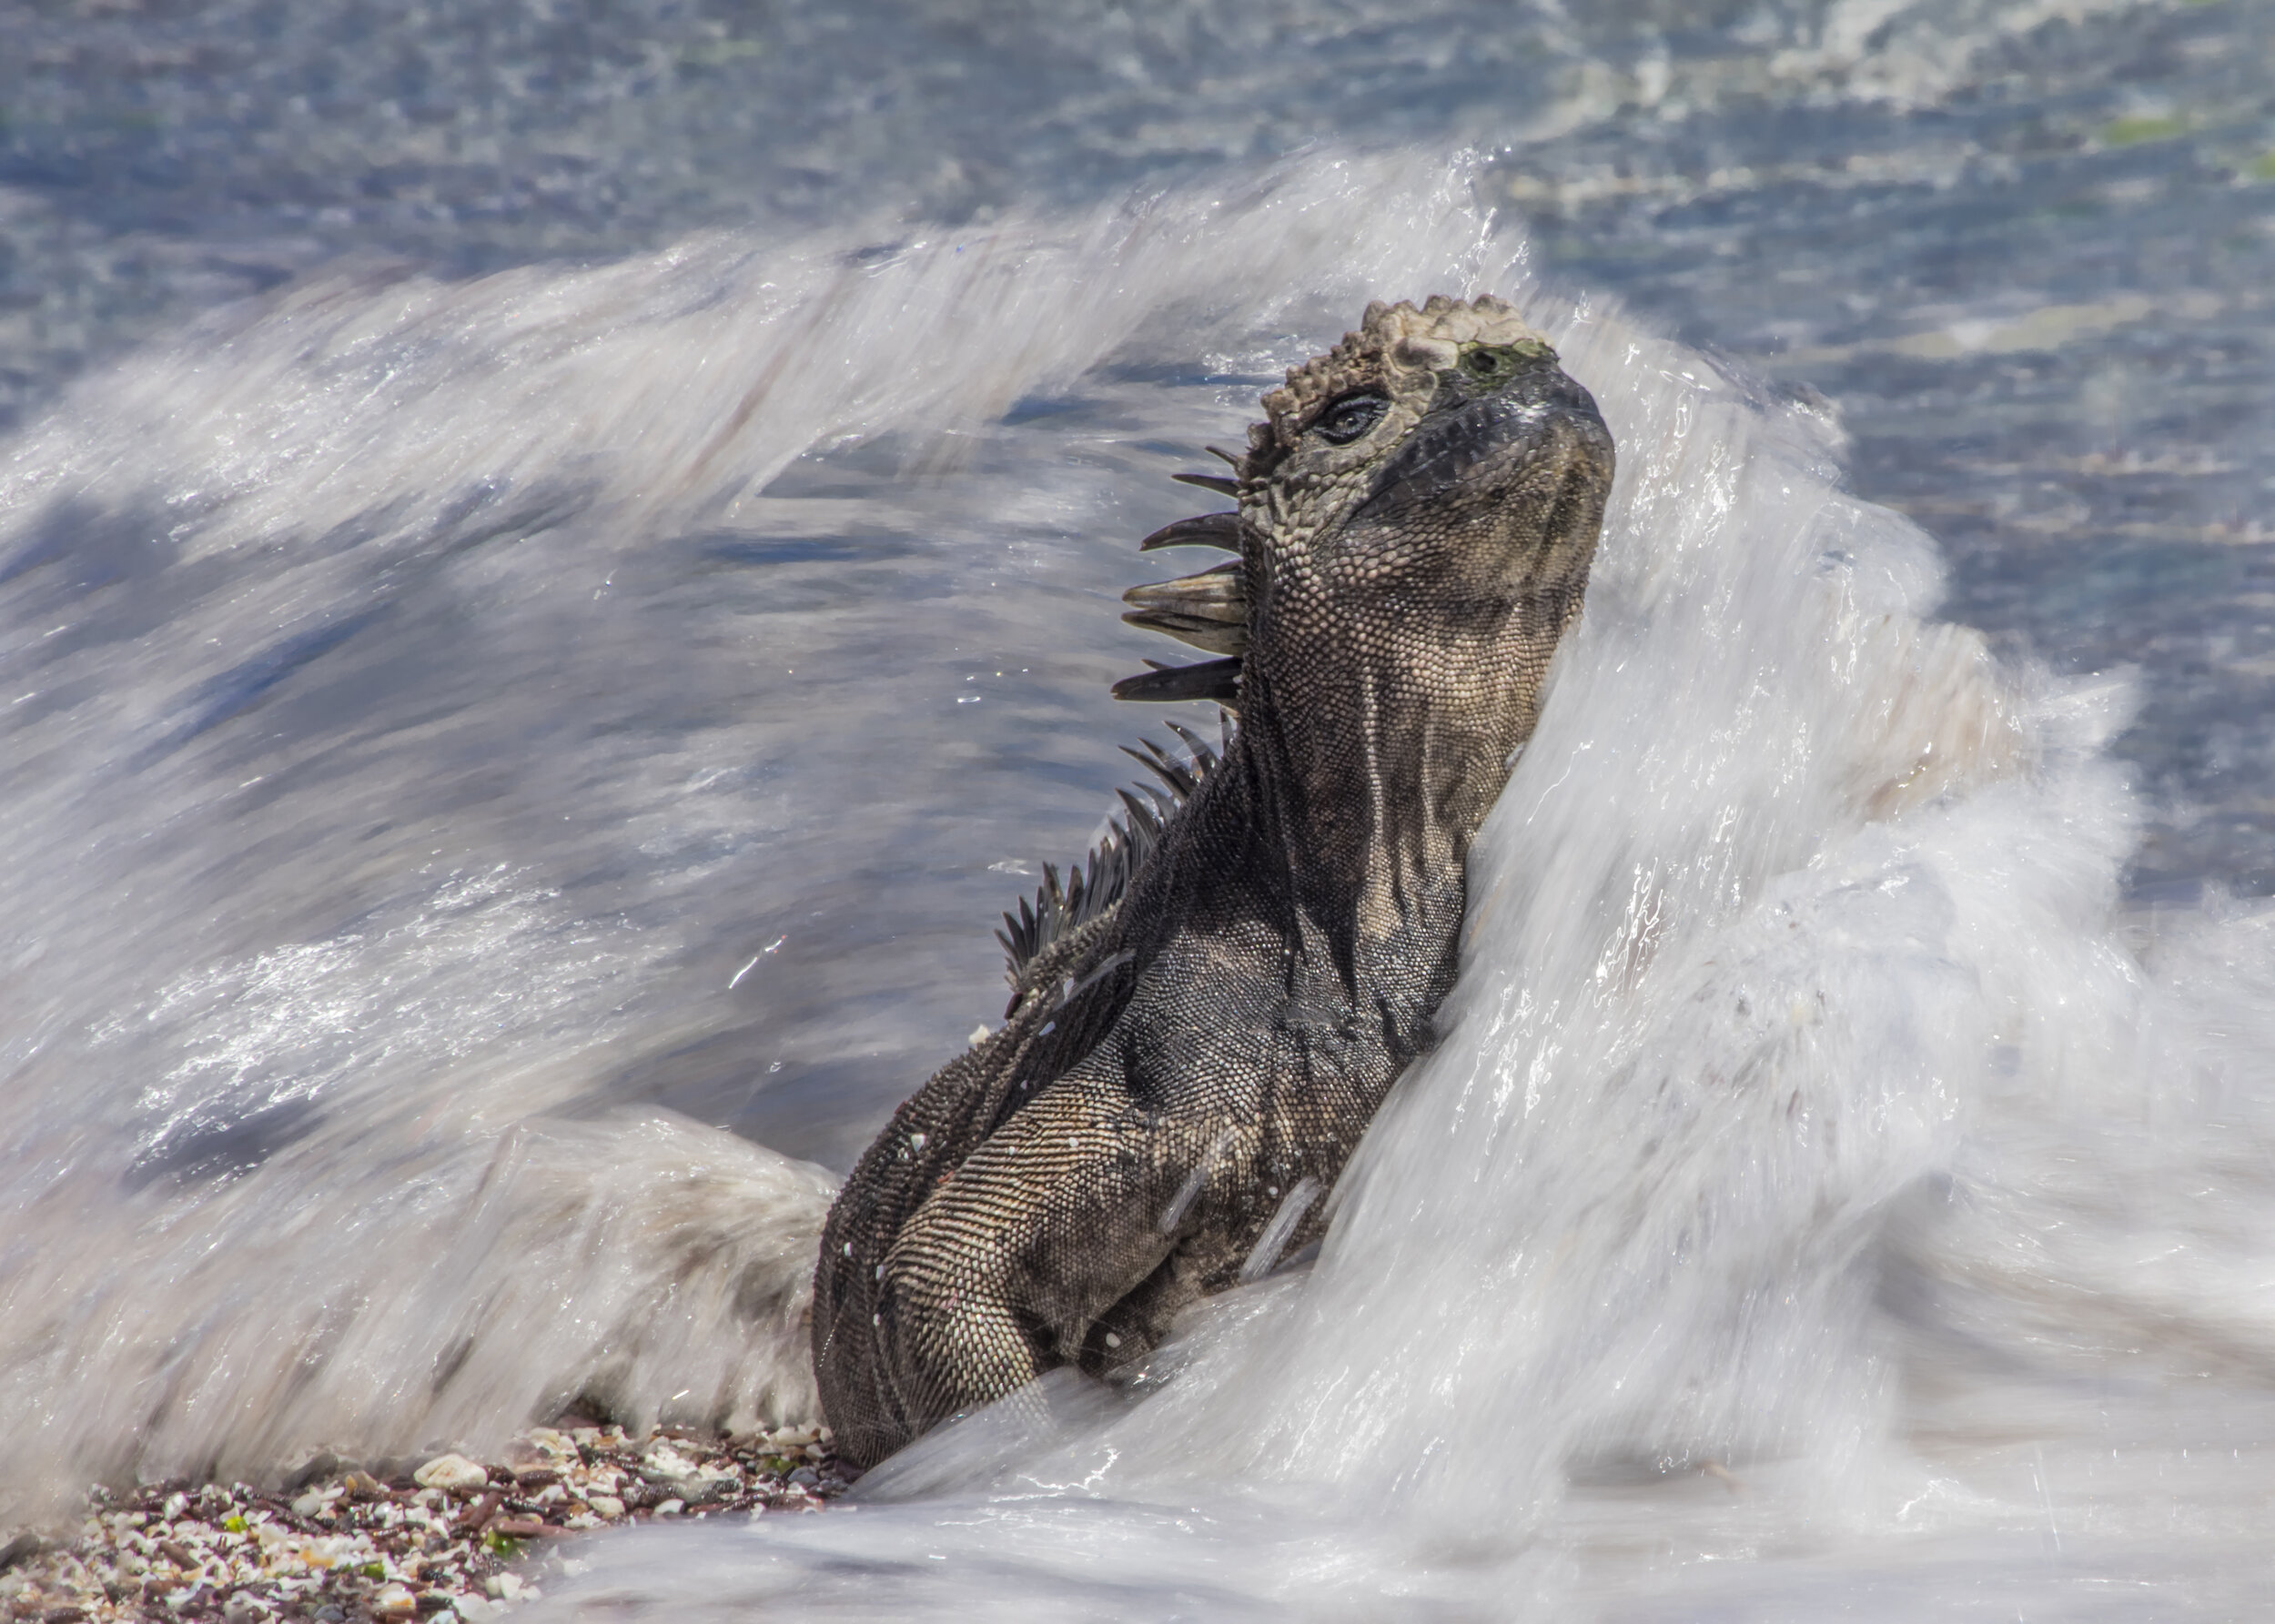 Marine Iguana in the surf (Galapagos Islands)